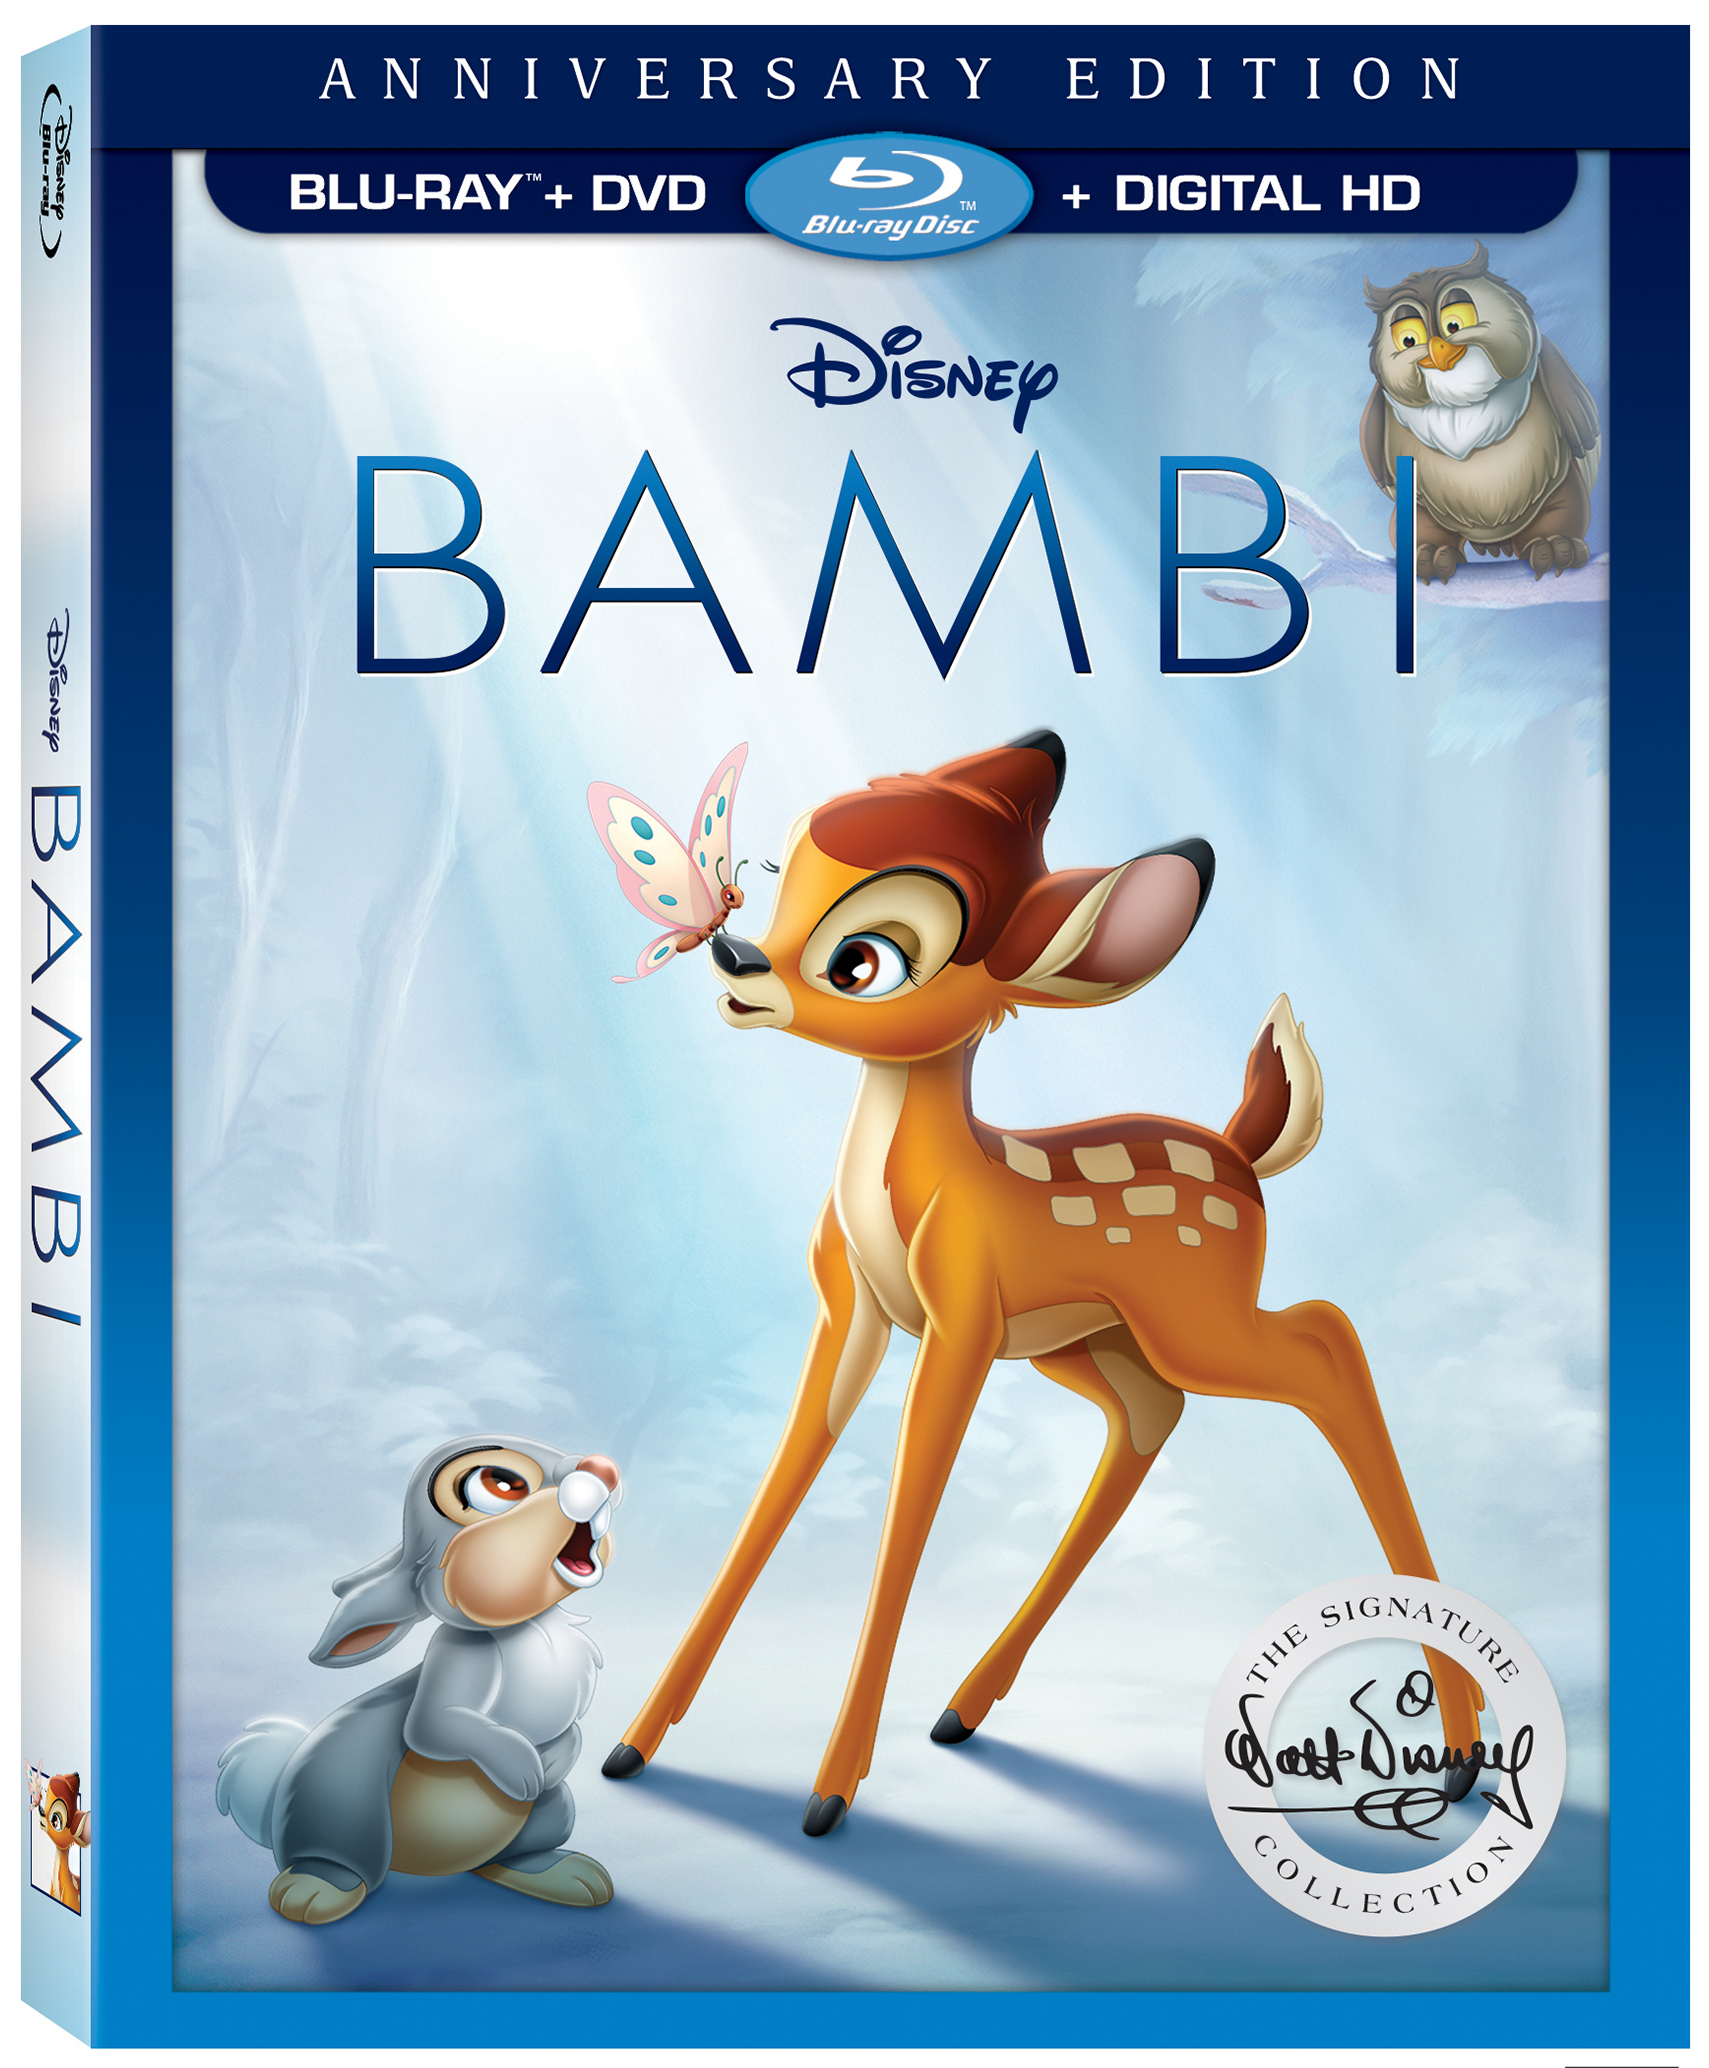 Disney's Bambi coming soon!